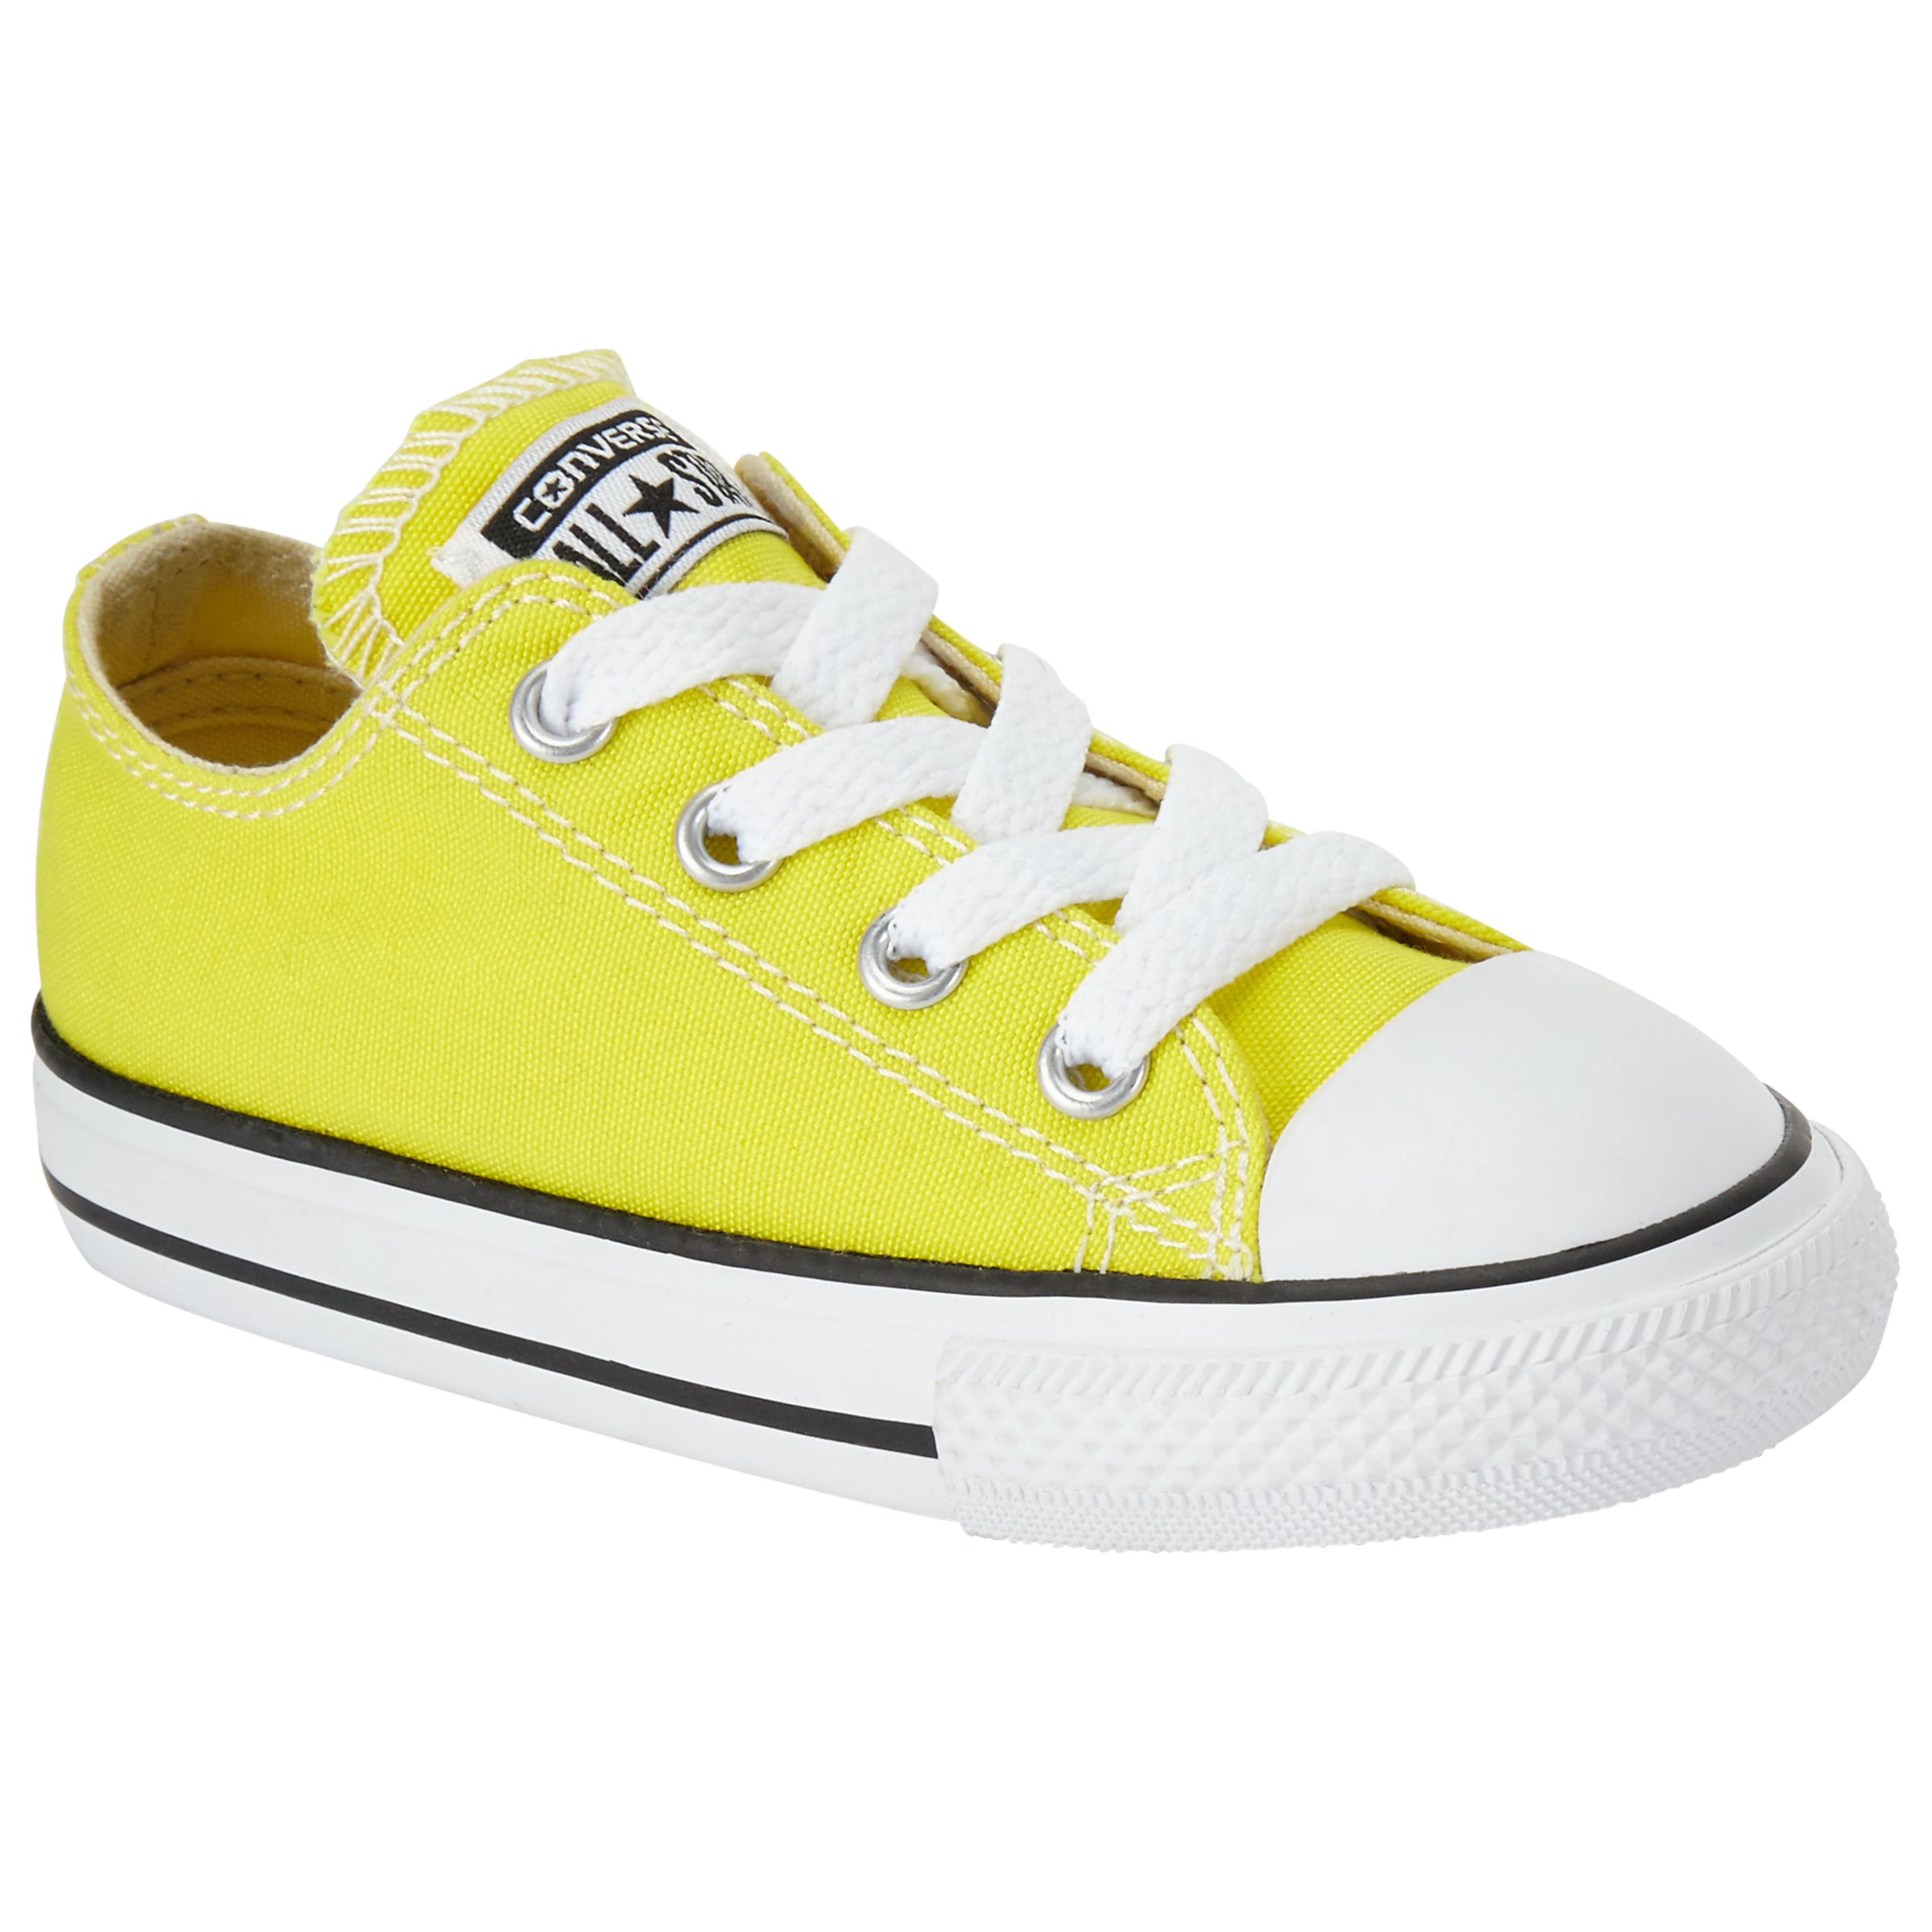 yellow converse toddler